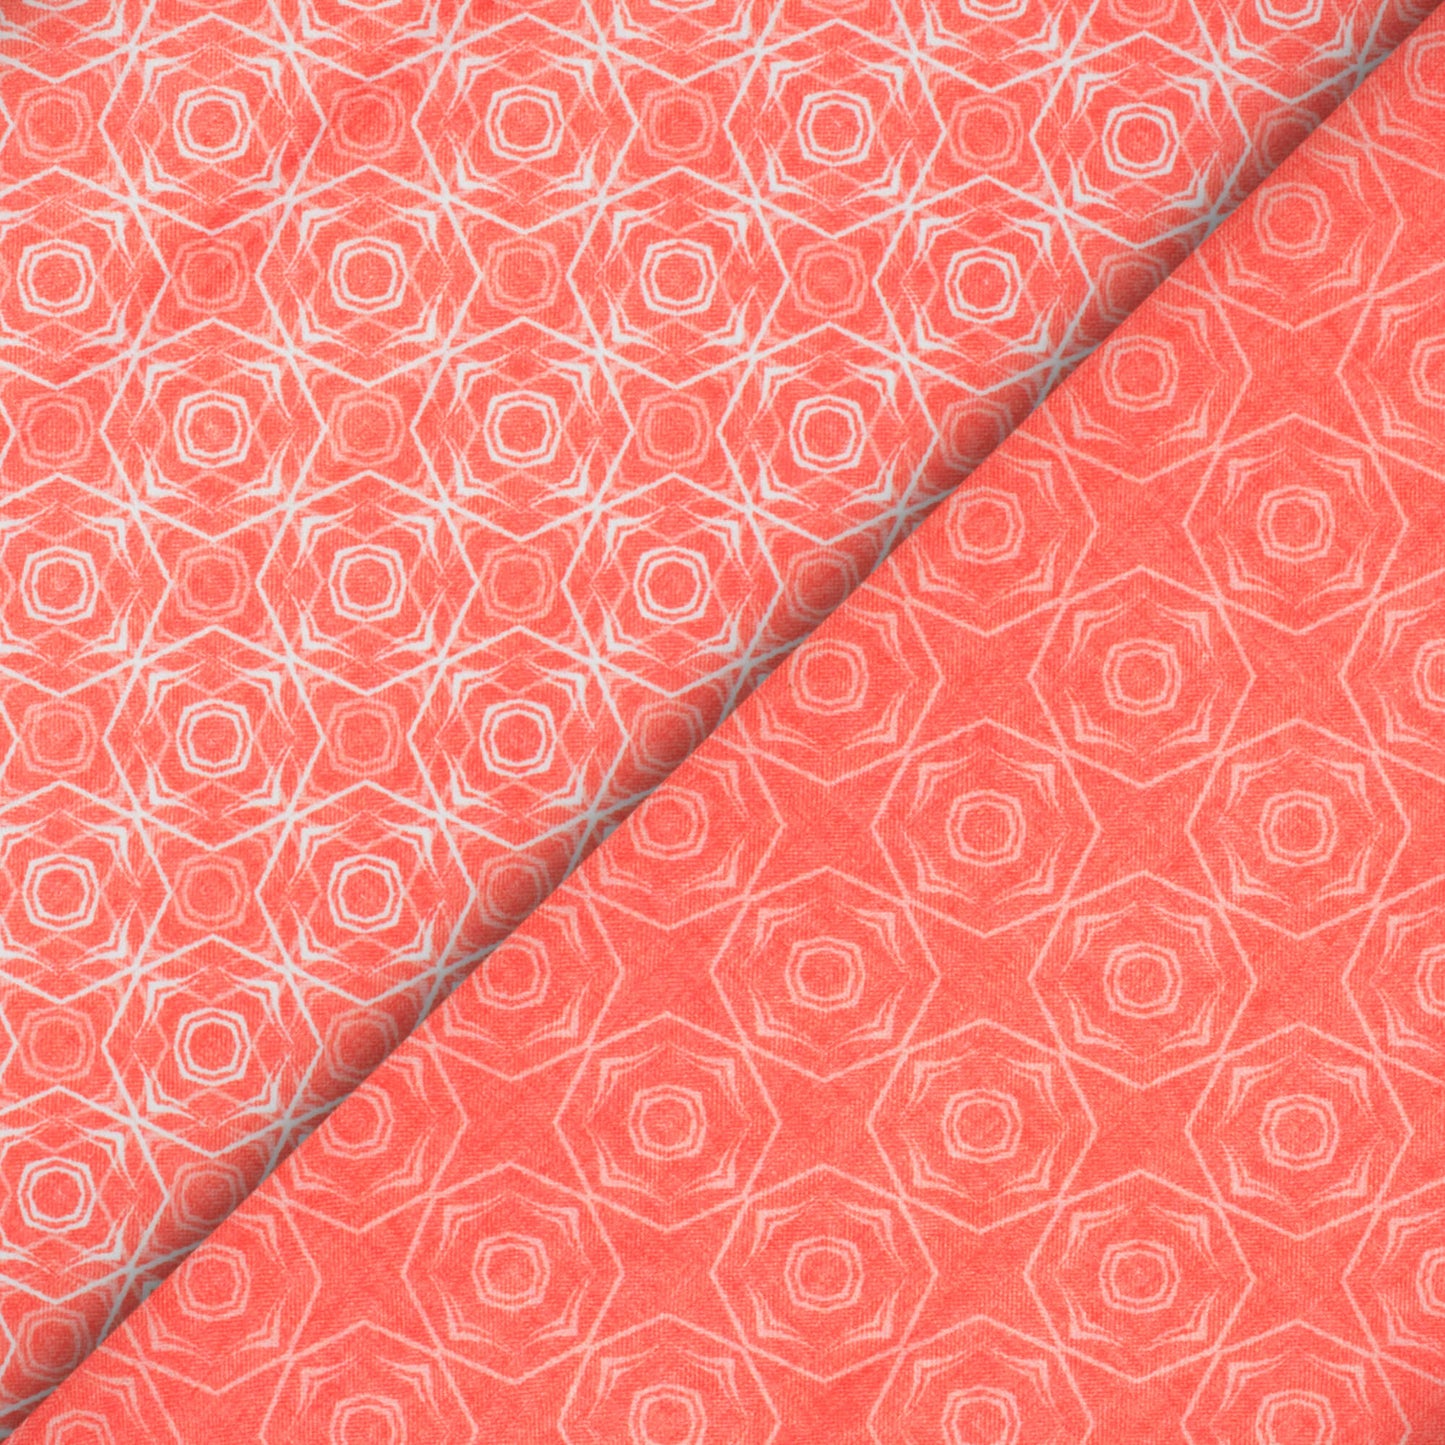 Desire Red And White Geometric Pattern Digital Print Lush Satin Fabric